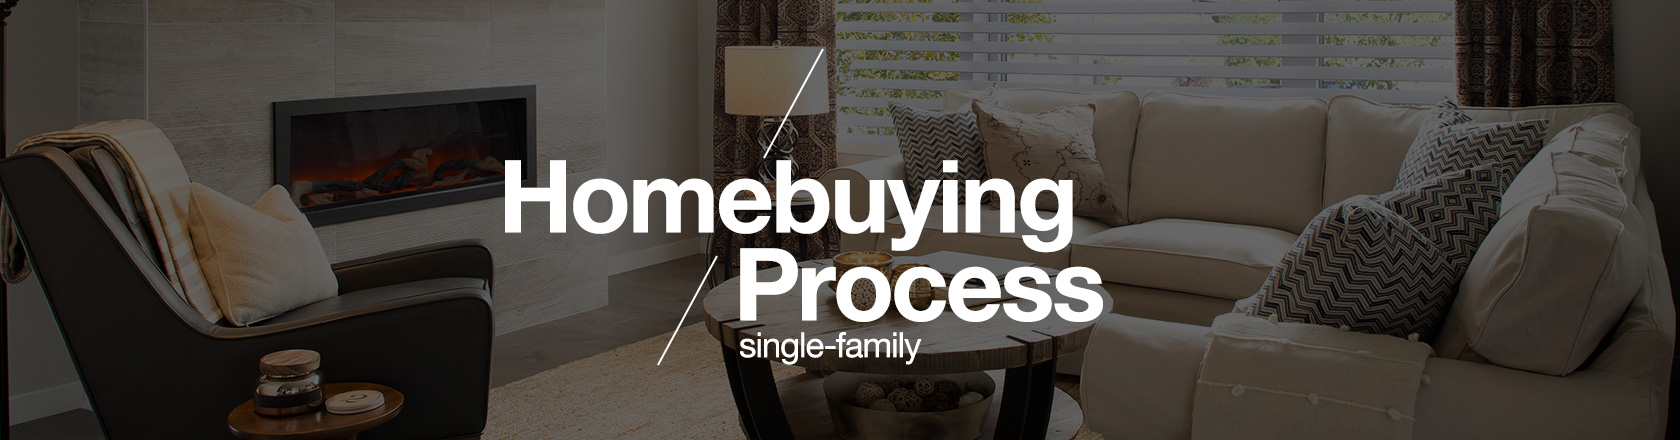 Single-Family New Home Advantage banner